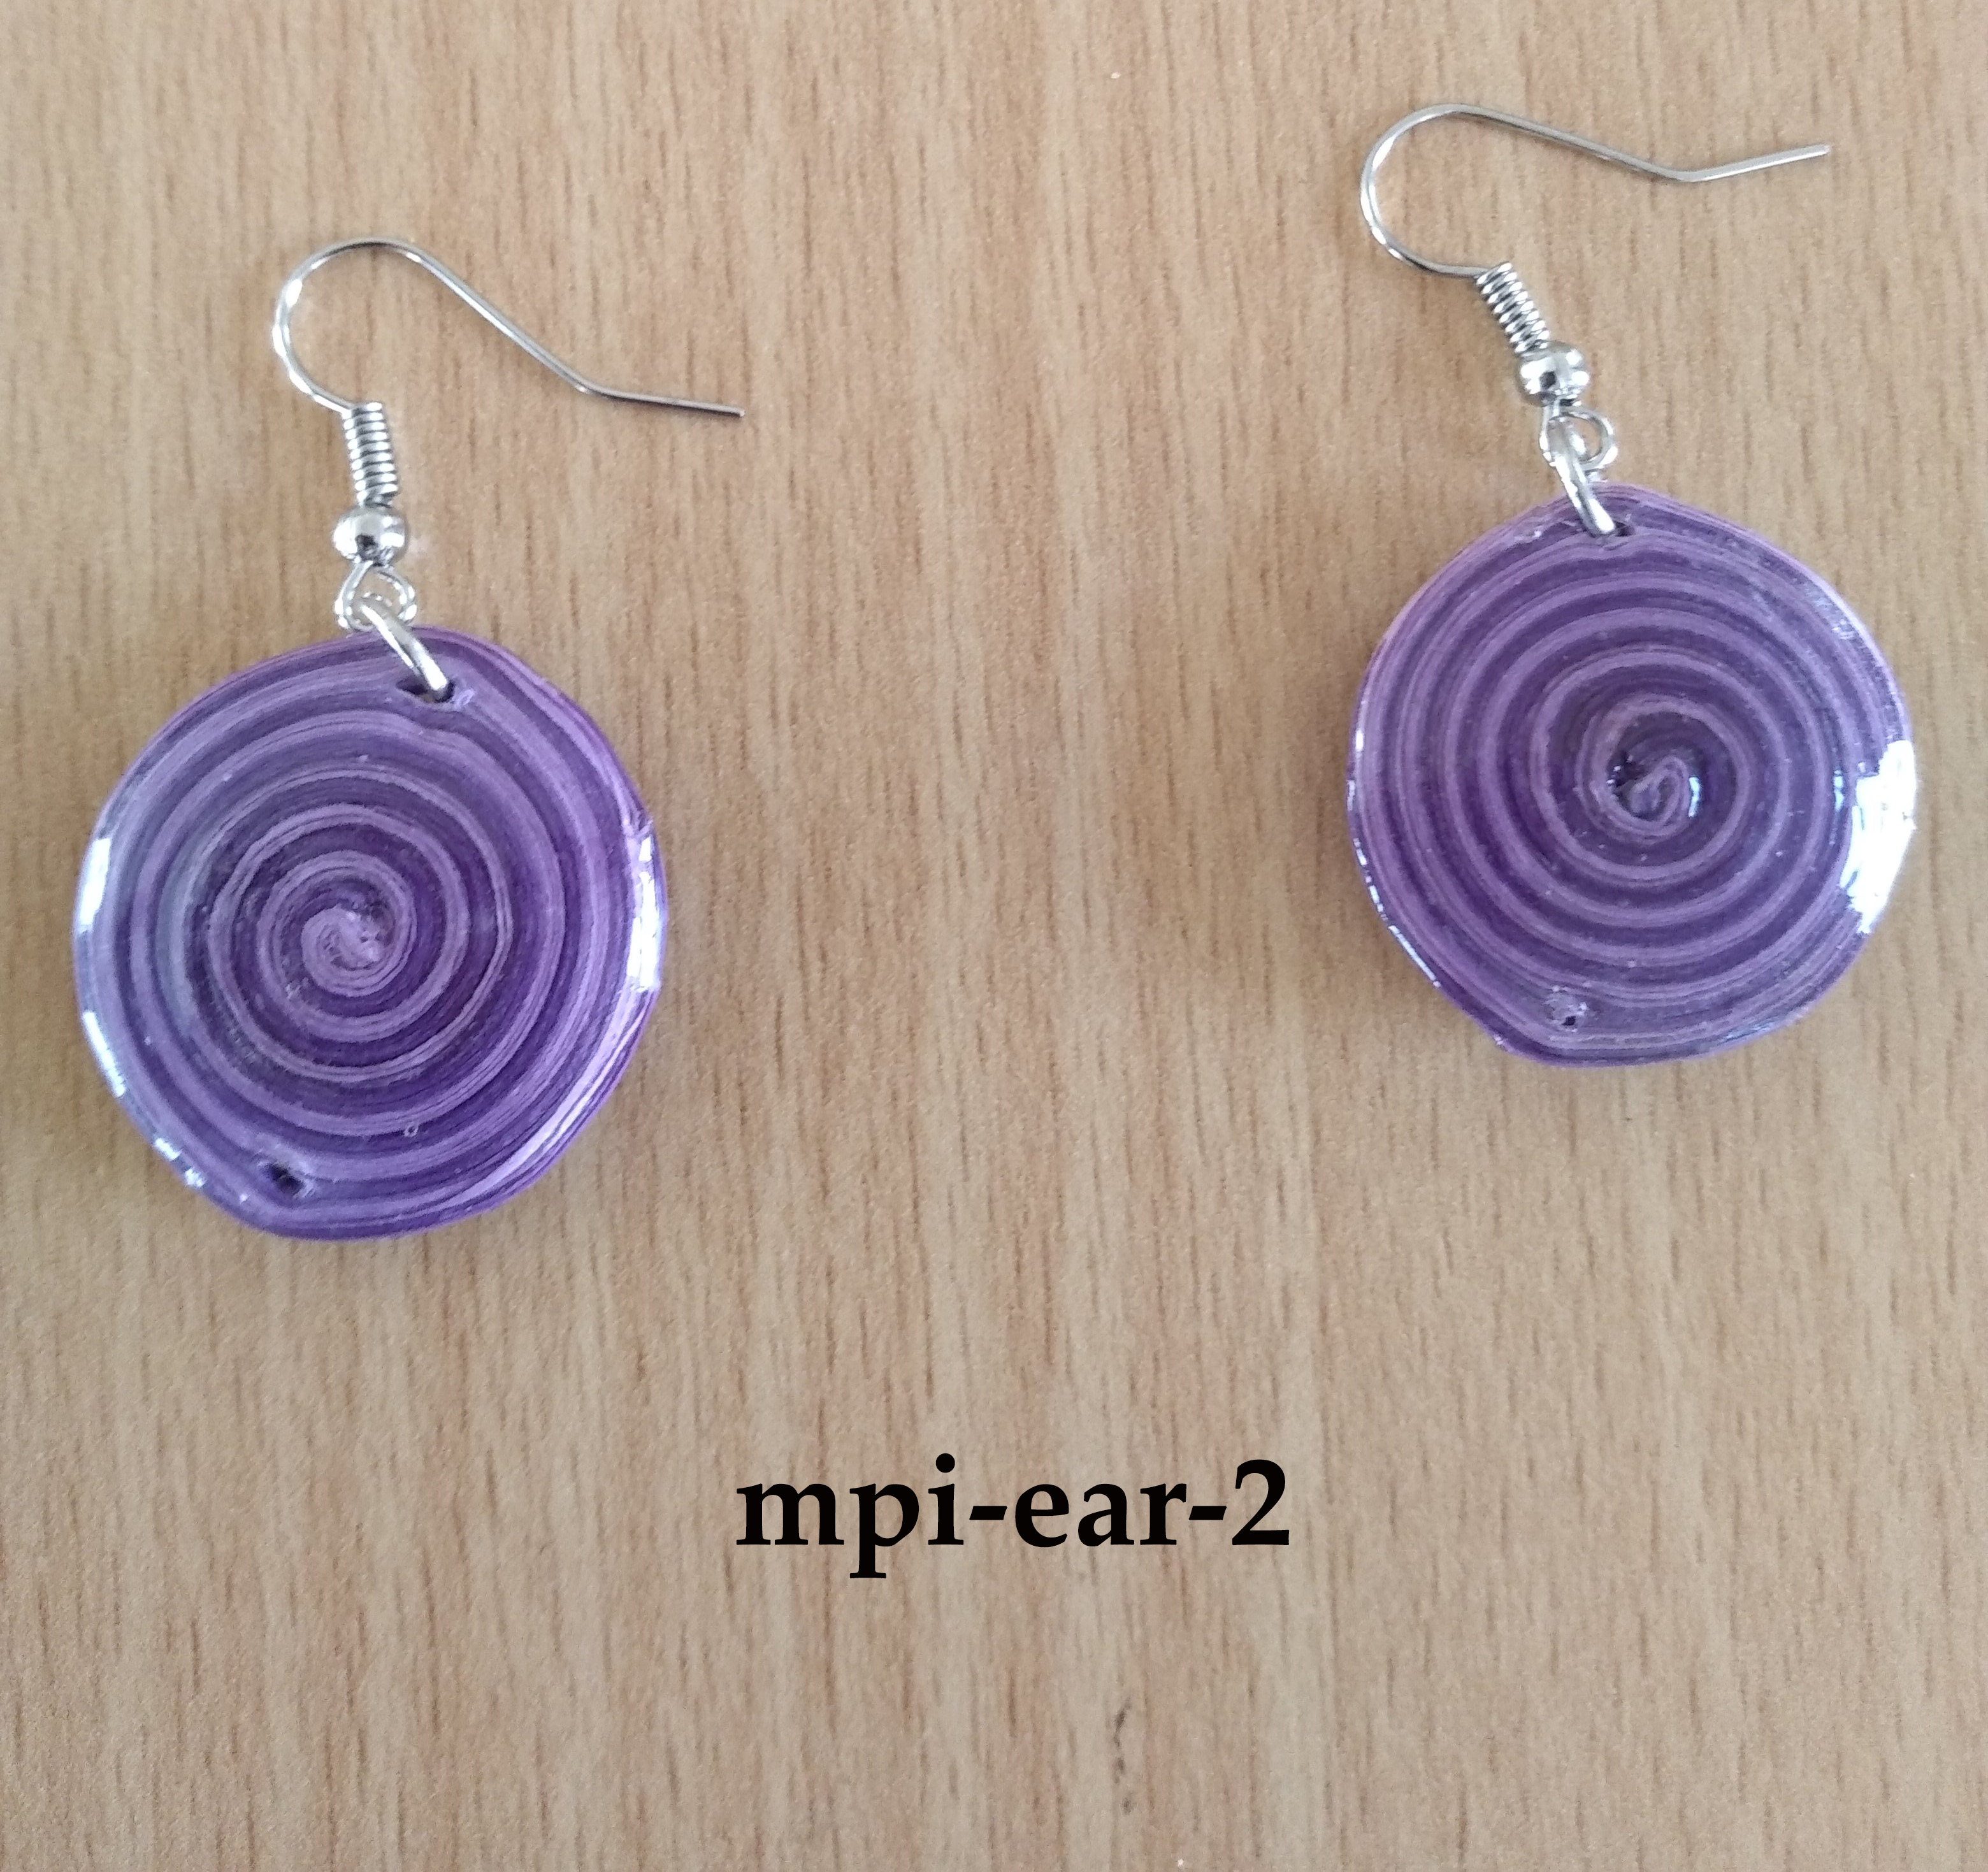 Mapesa Ear rings (Mpi-ear-2)